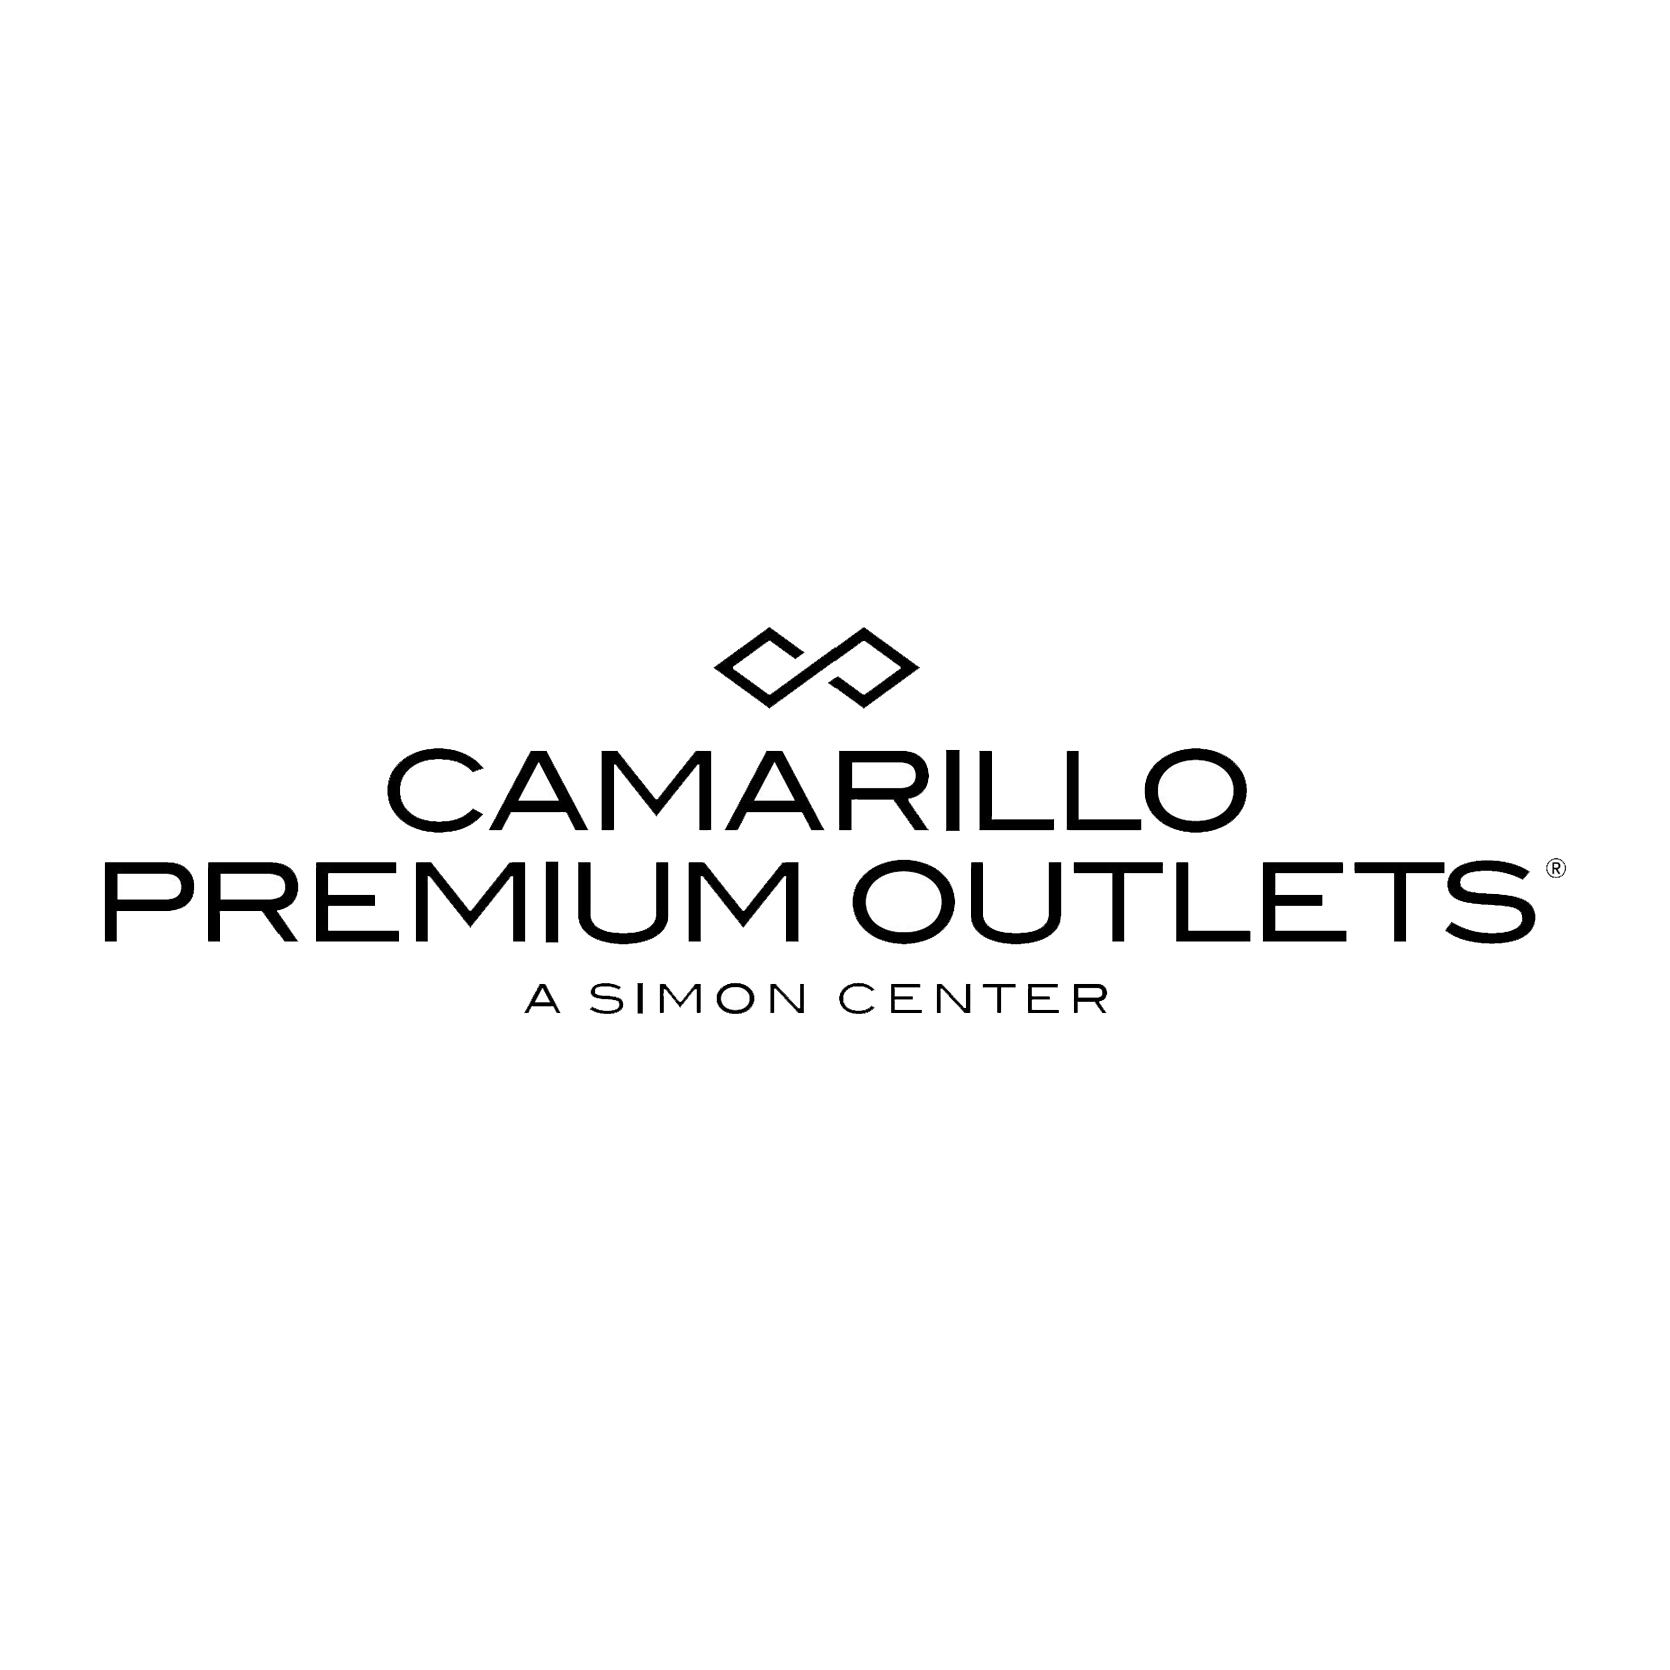 Camarillo Premium Outlets - Join Camarillo Premium Outlets THE